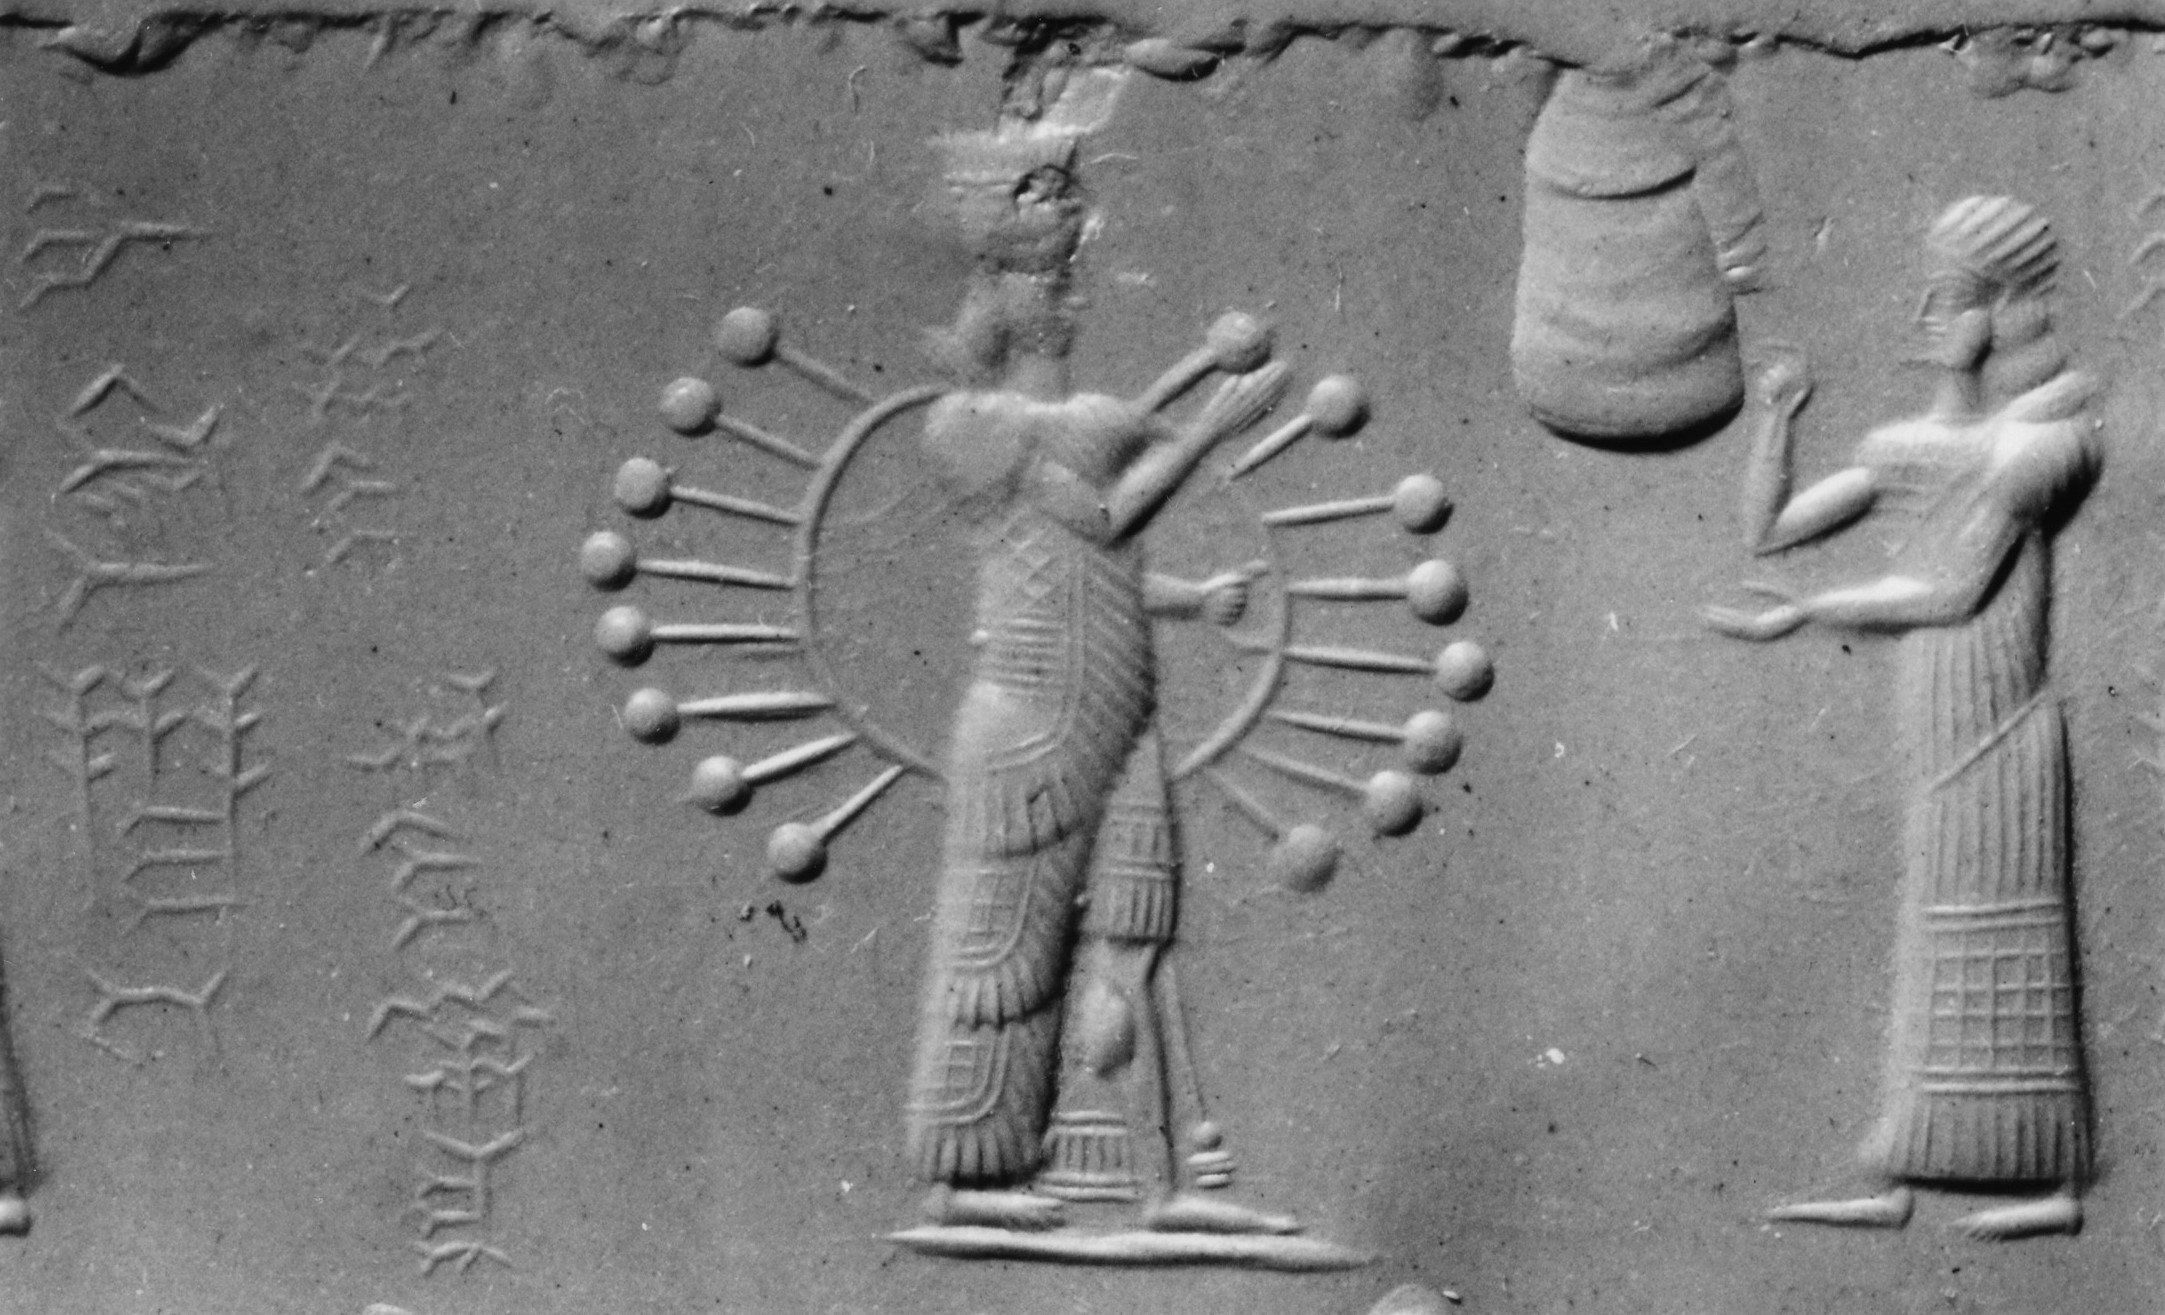 2a - Inanna with all her majesty - alien technologies, & her cautioning grandaunt Ninhursag